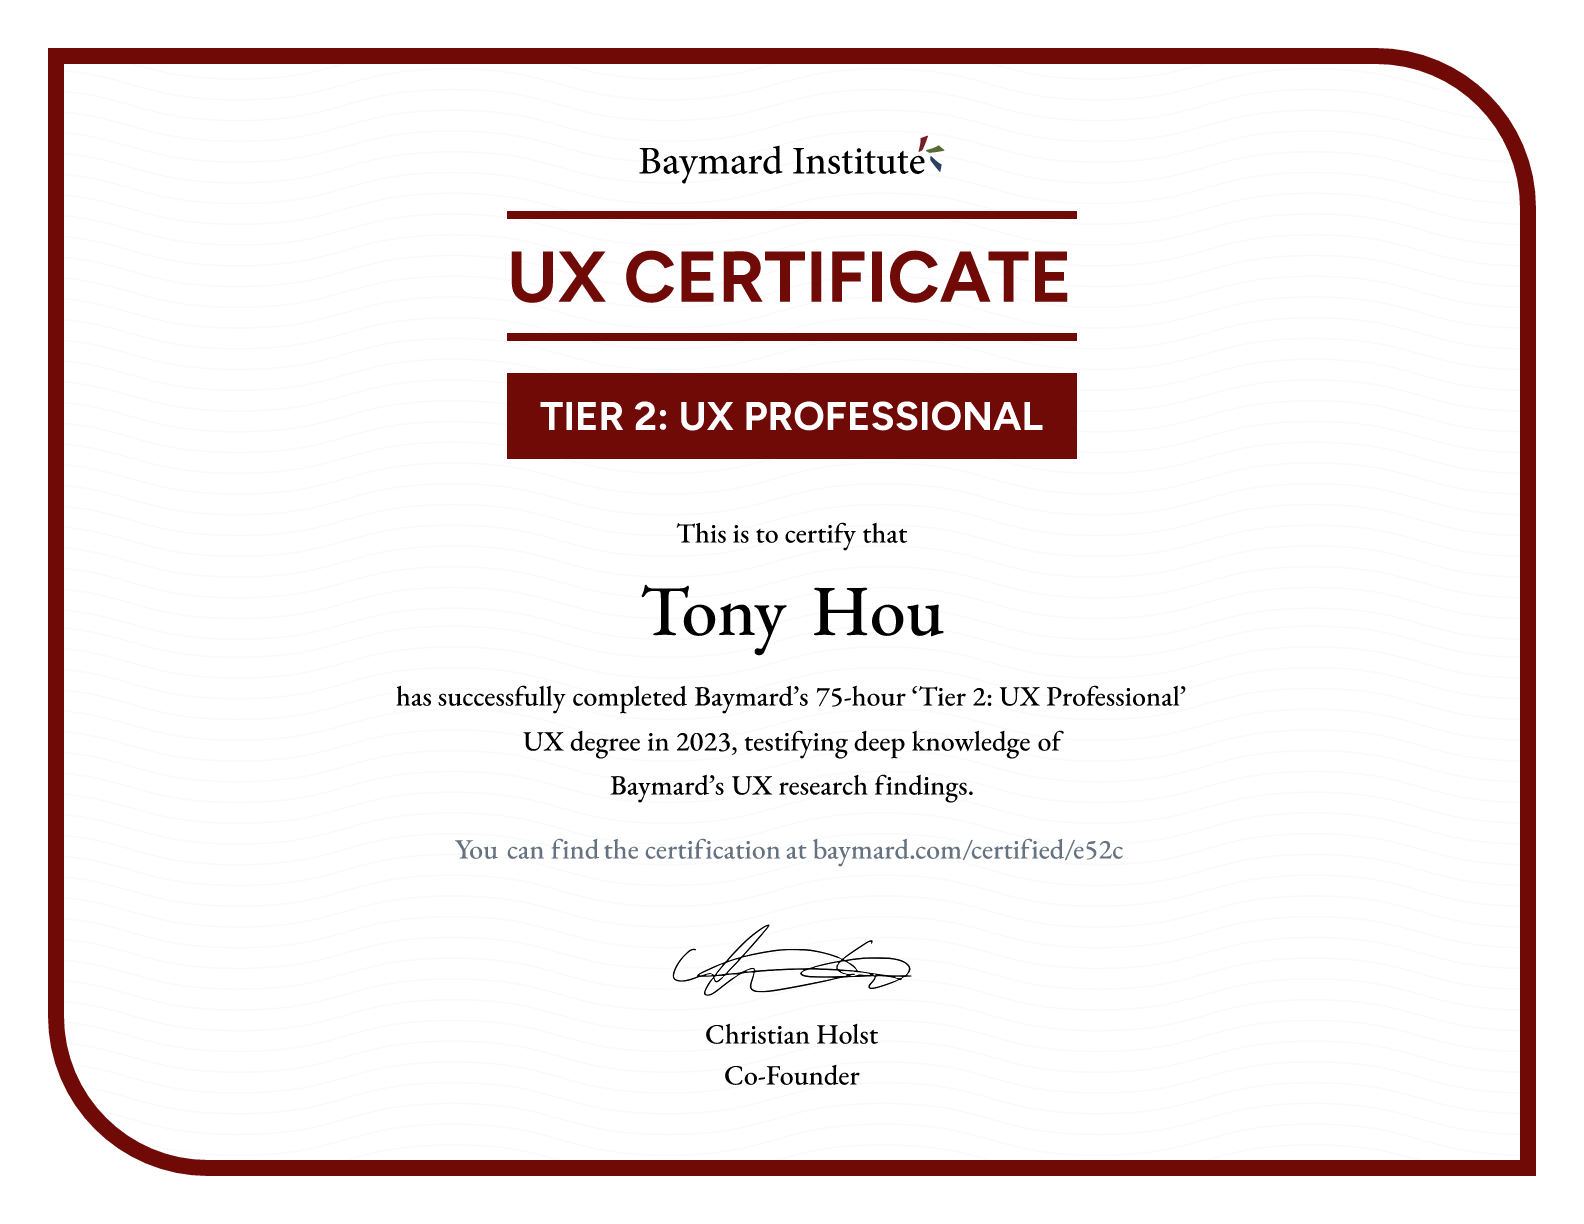 Tony Hou’s certificate